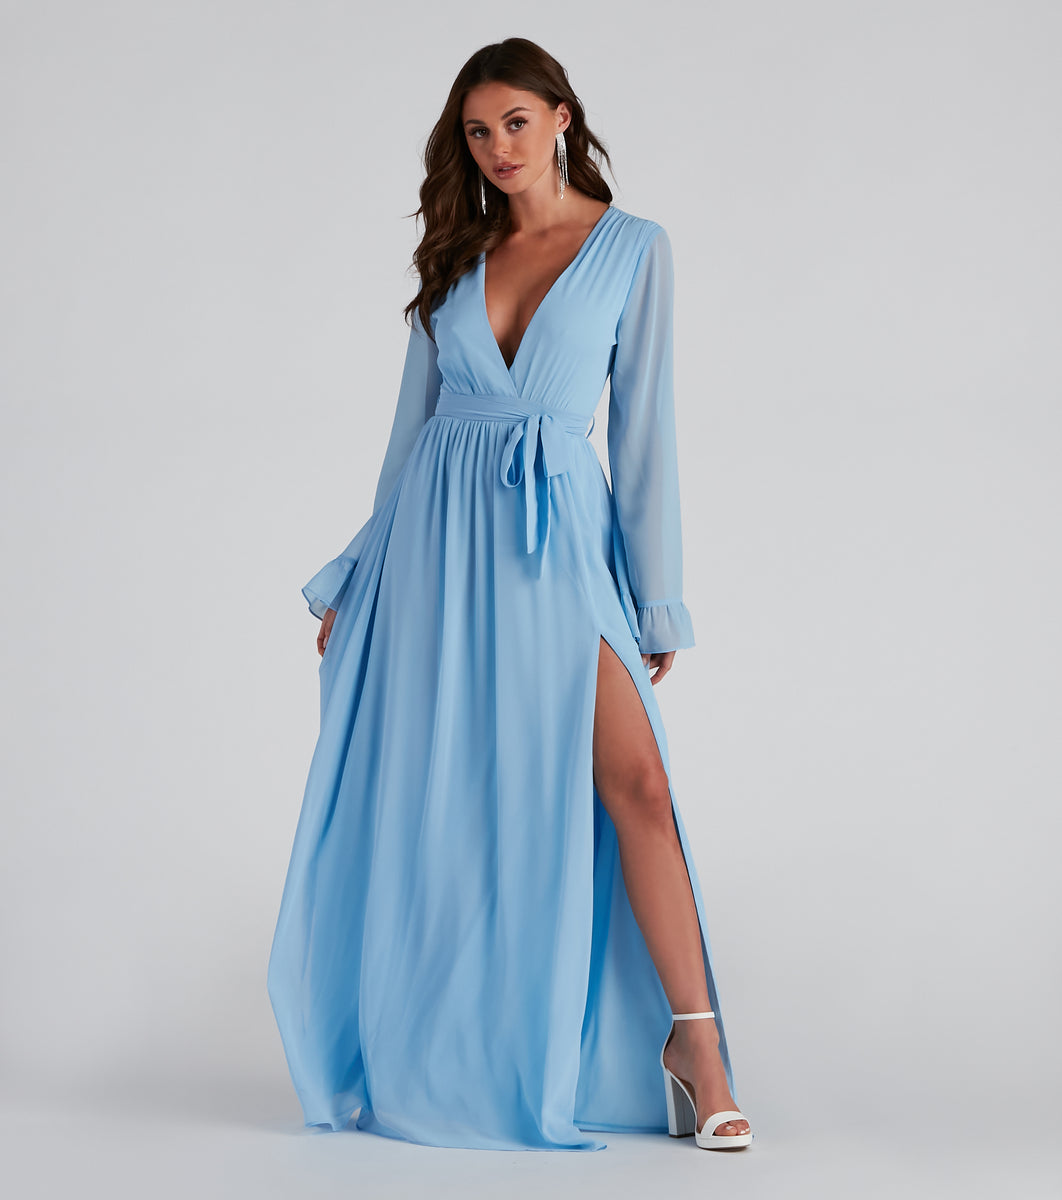 Maya Long Sleeve Chiffon A-Line Dress & Windsor